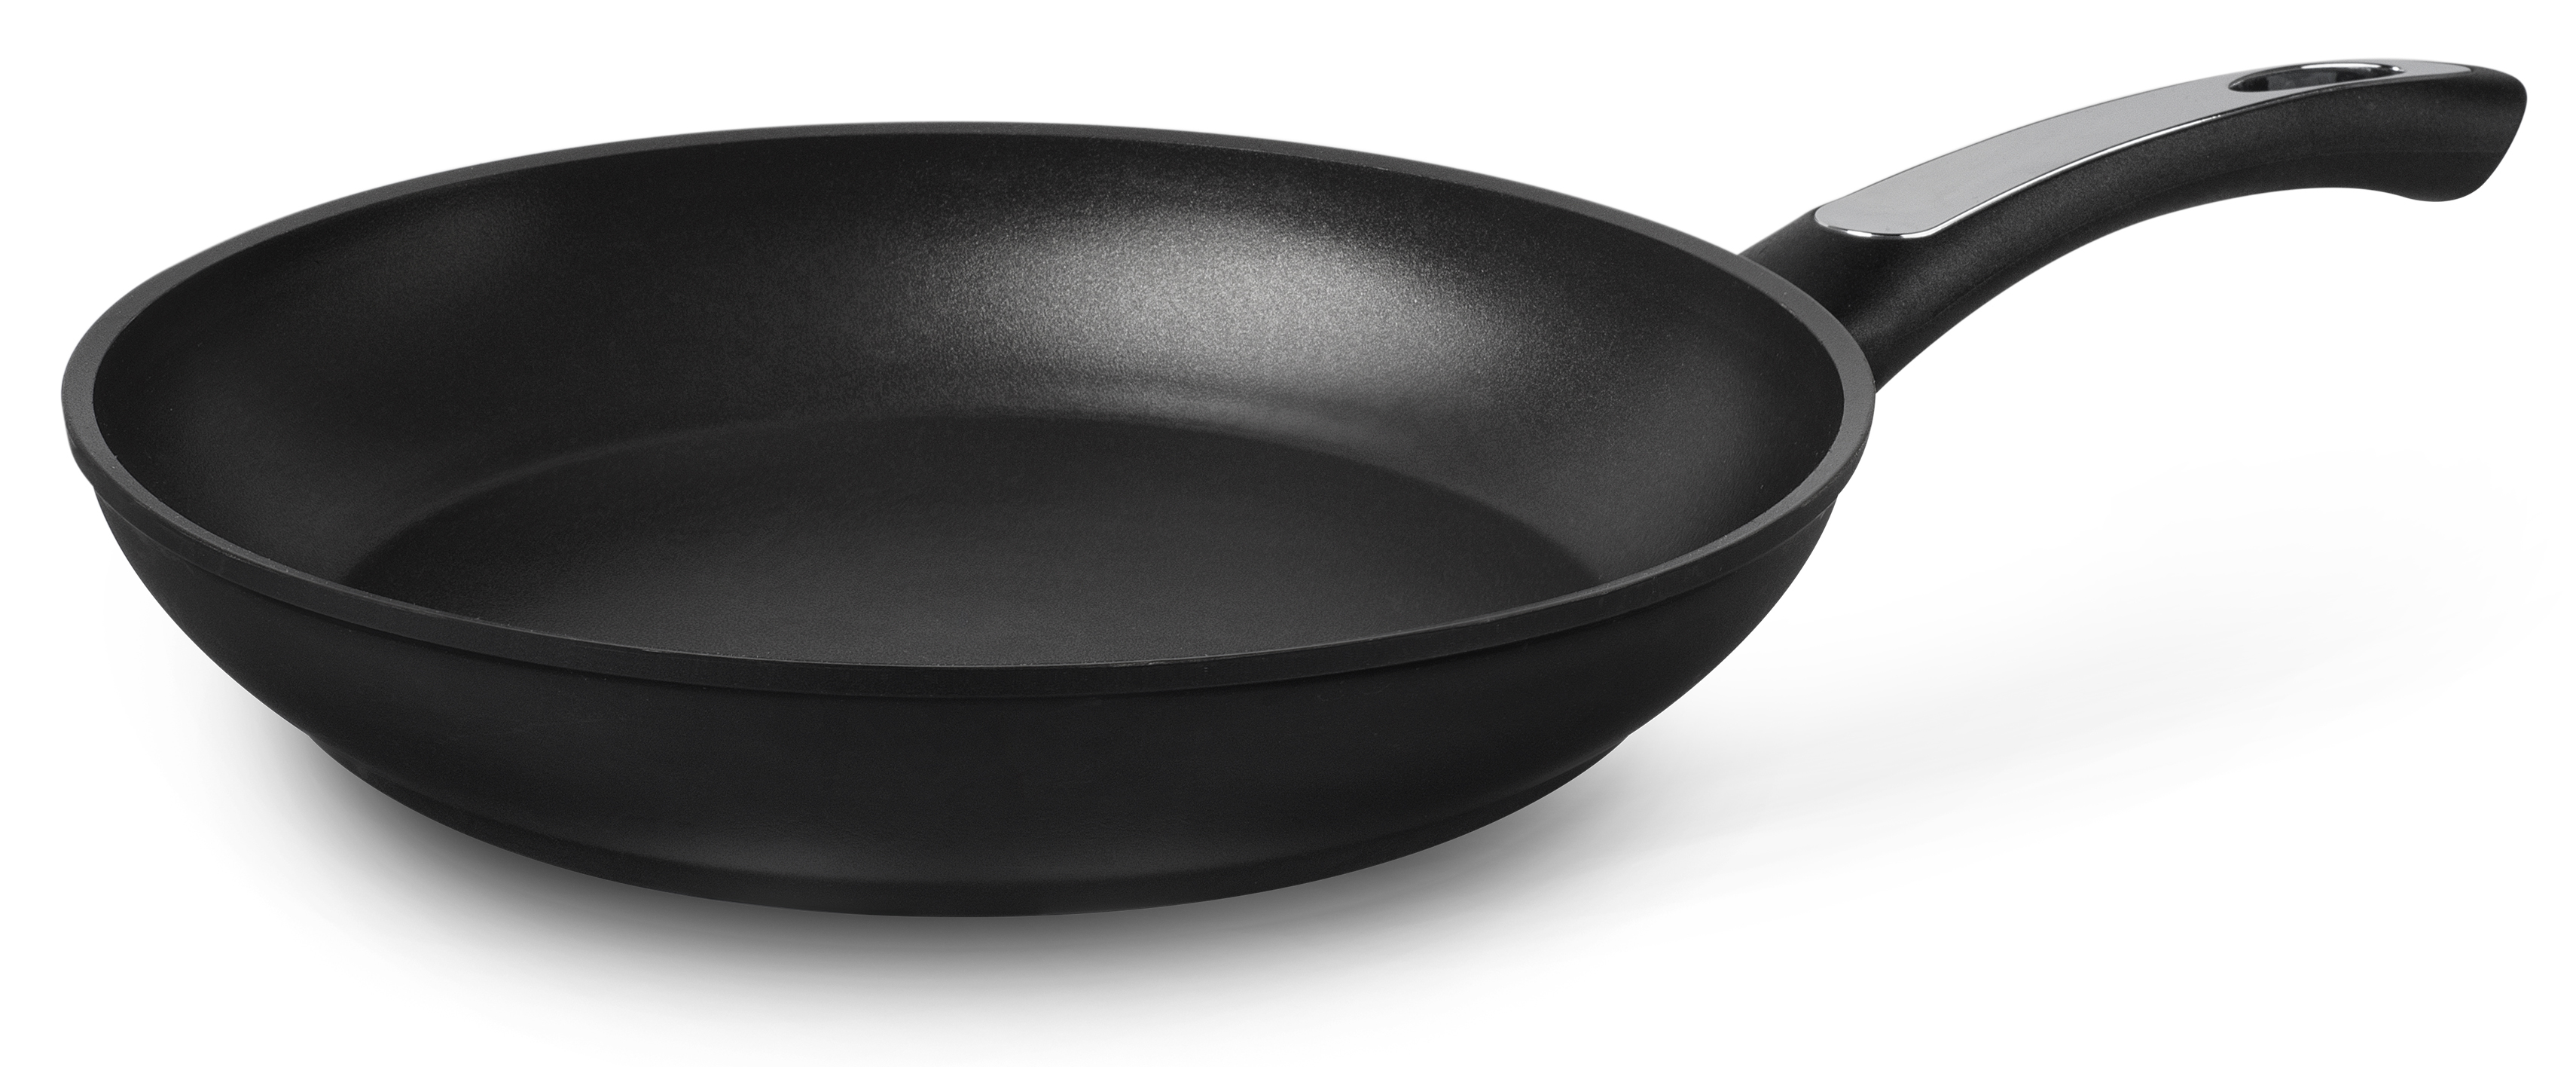 Сковорода Webber Black Onyx be-4512/20n 20 см. Сковорода 40 см. Сковорода padella cm40 093740 frying Pan. Make pan